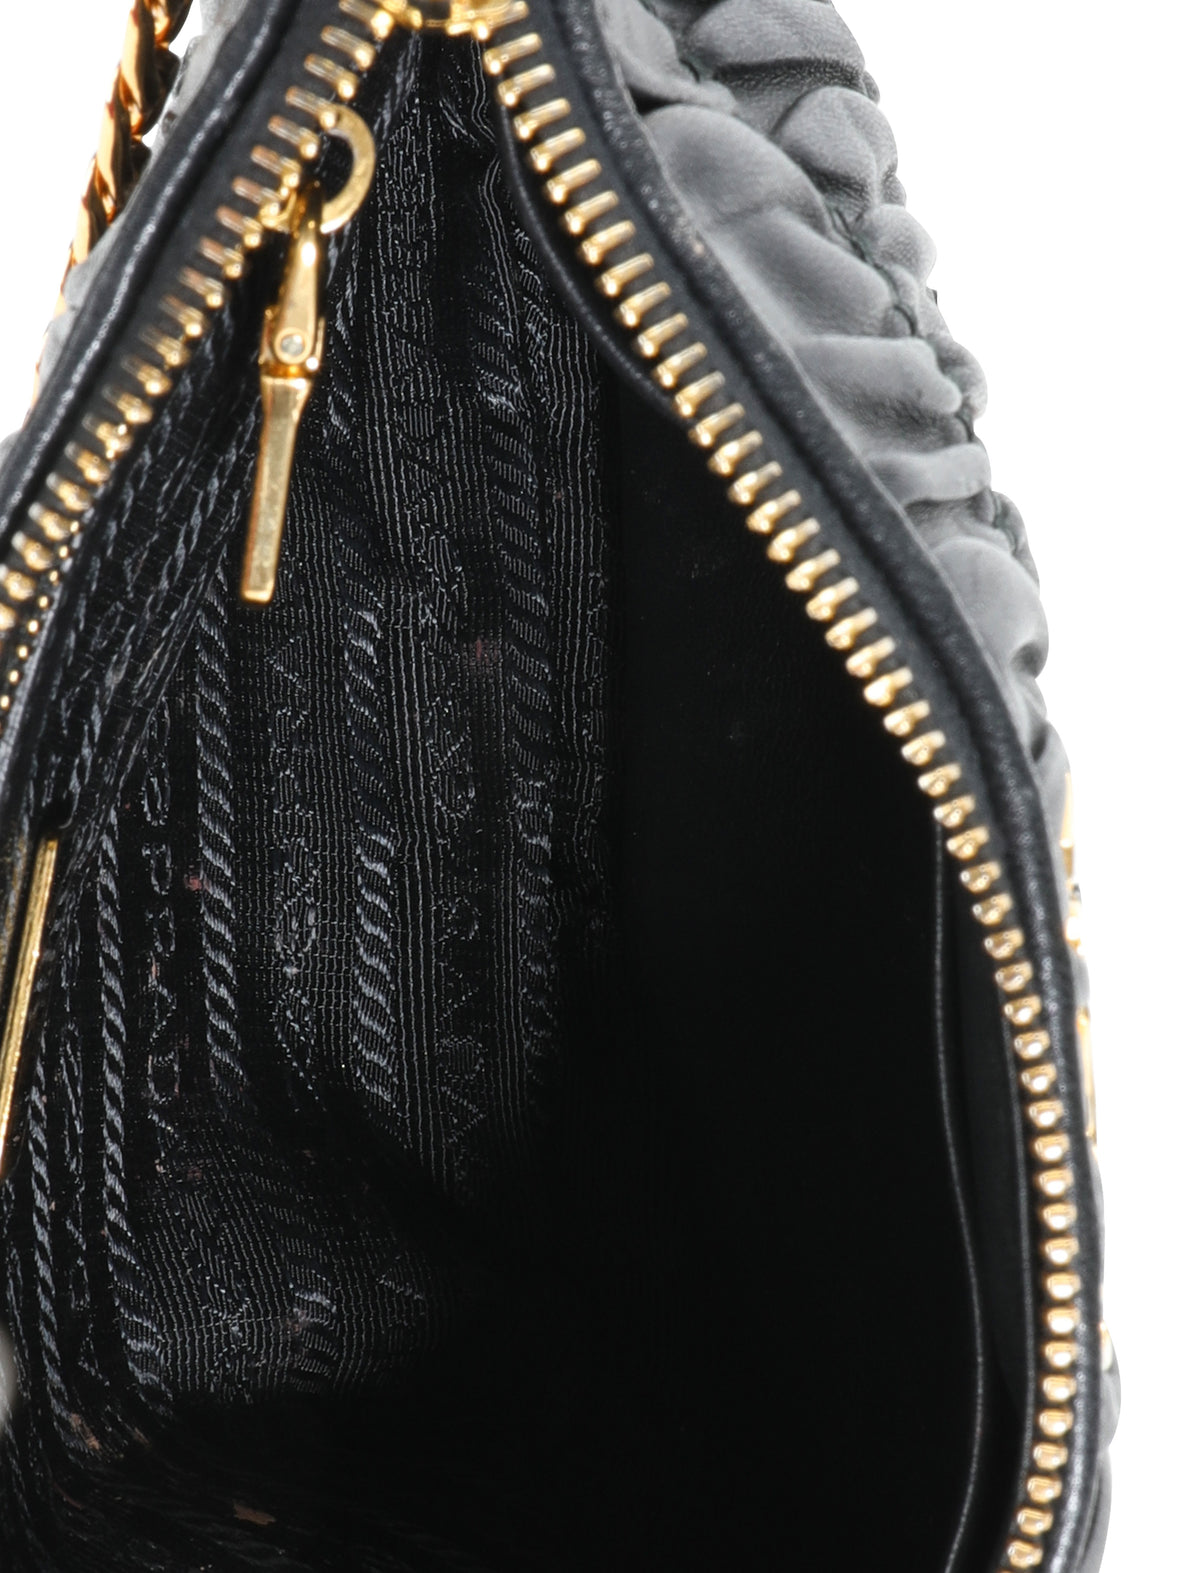 Prada Black Gaufre Nappa Leather Bag